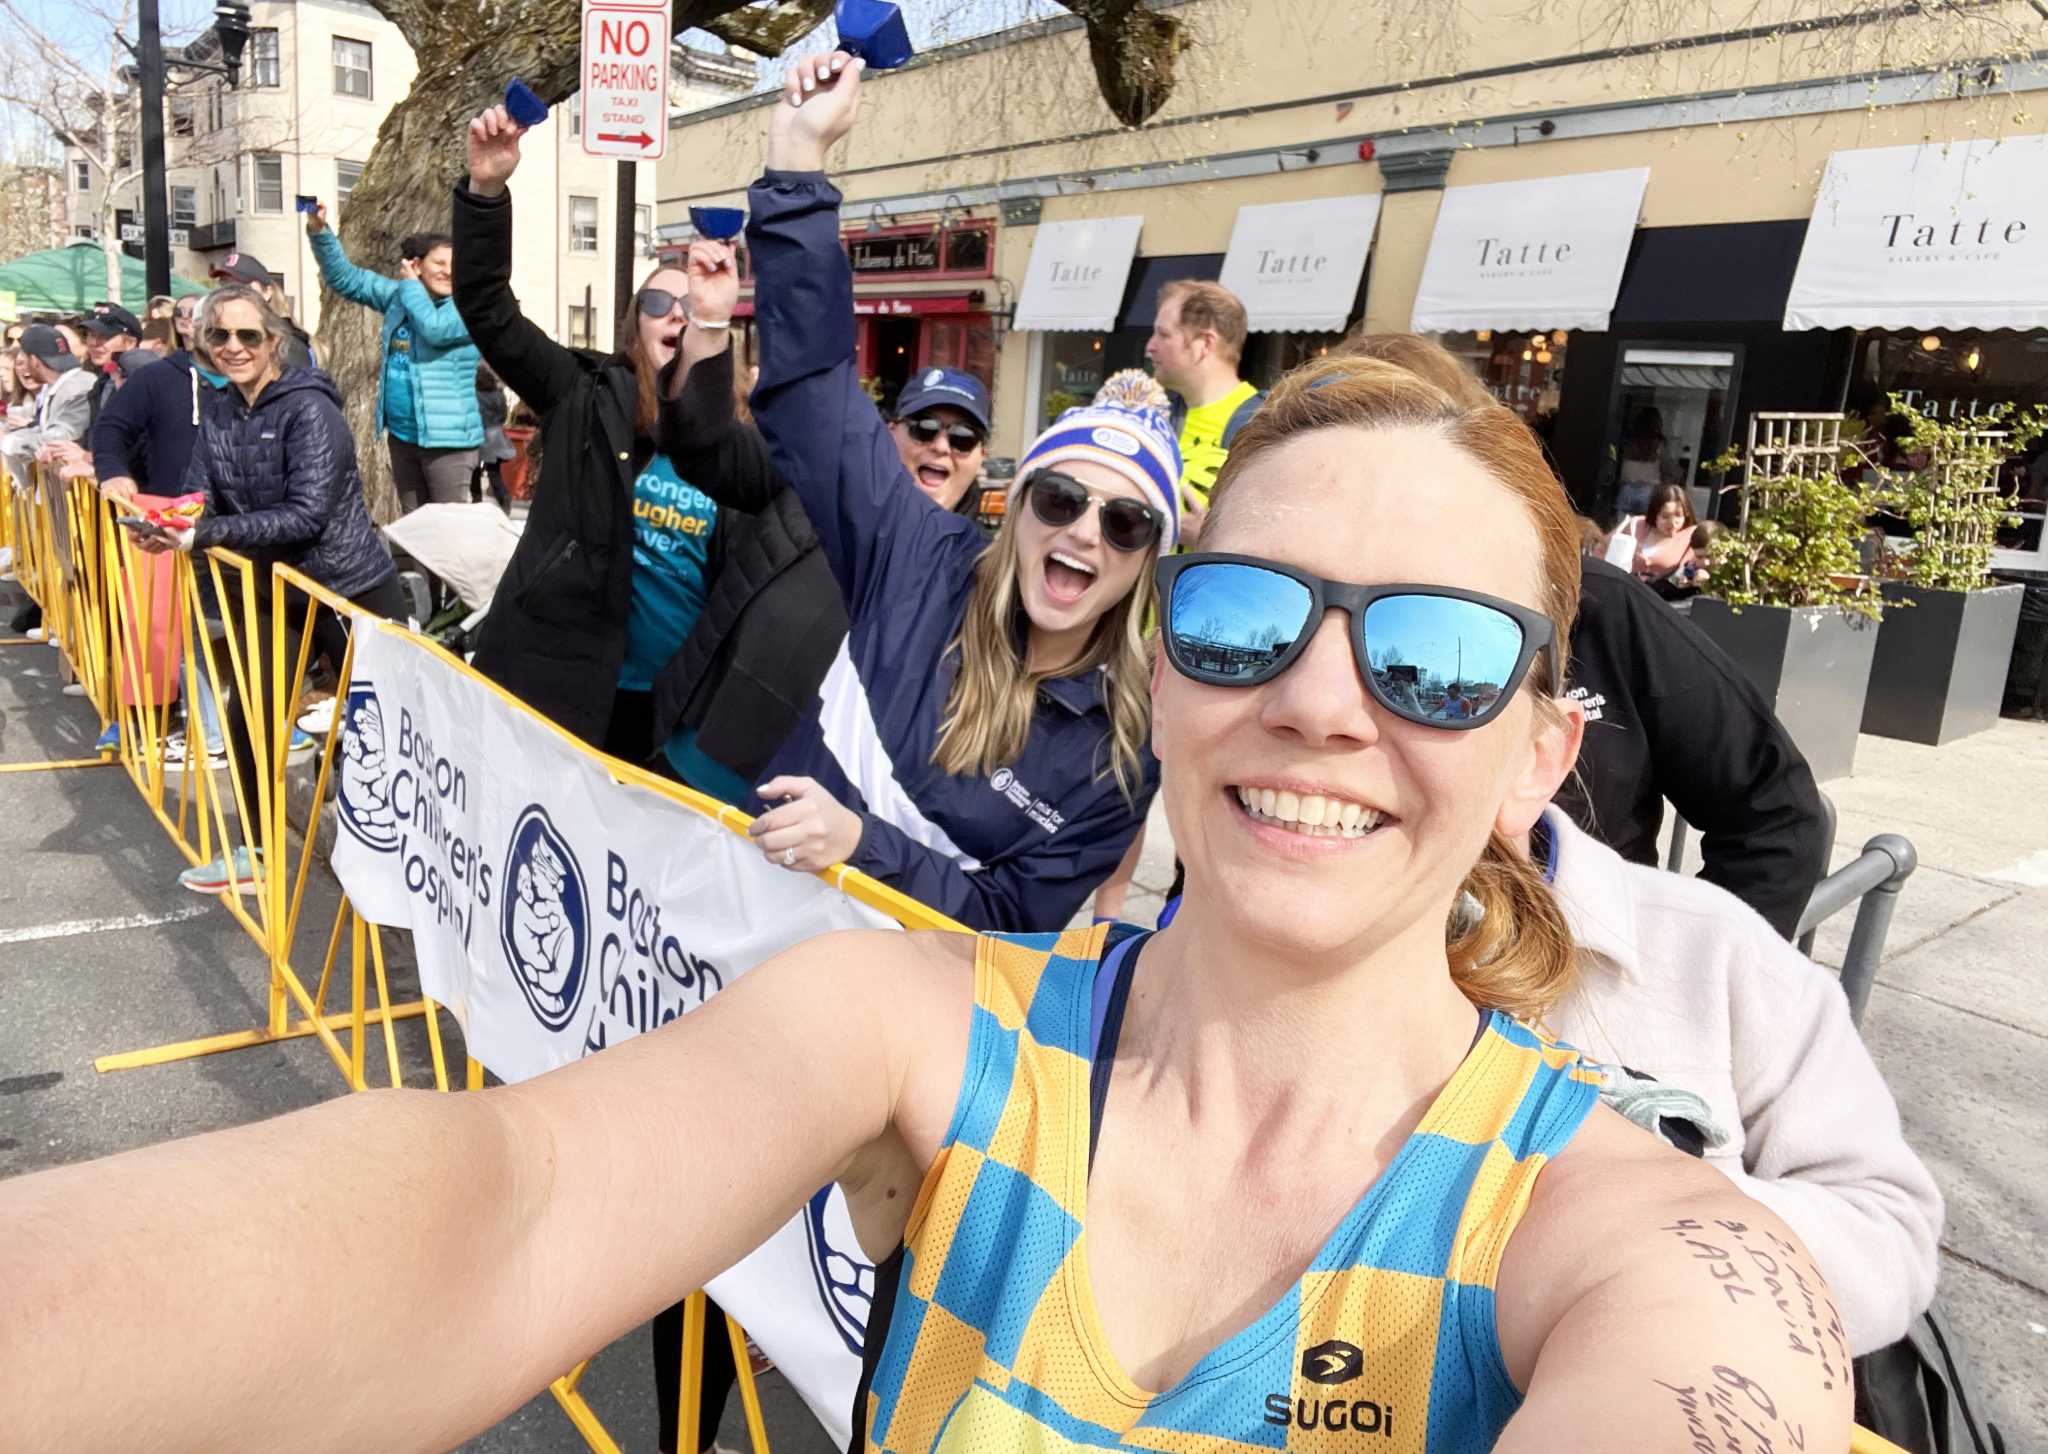 Haddam woman runs Boston Marathon, raises $8,000 for Children’s Hospital team